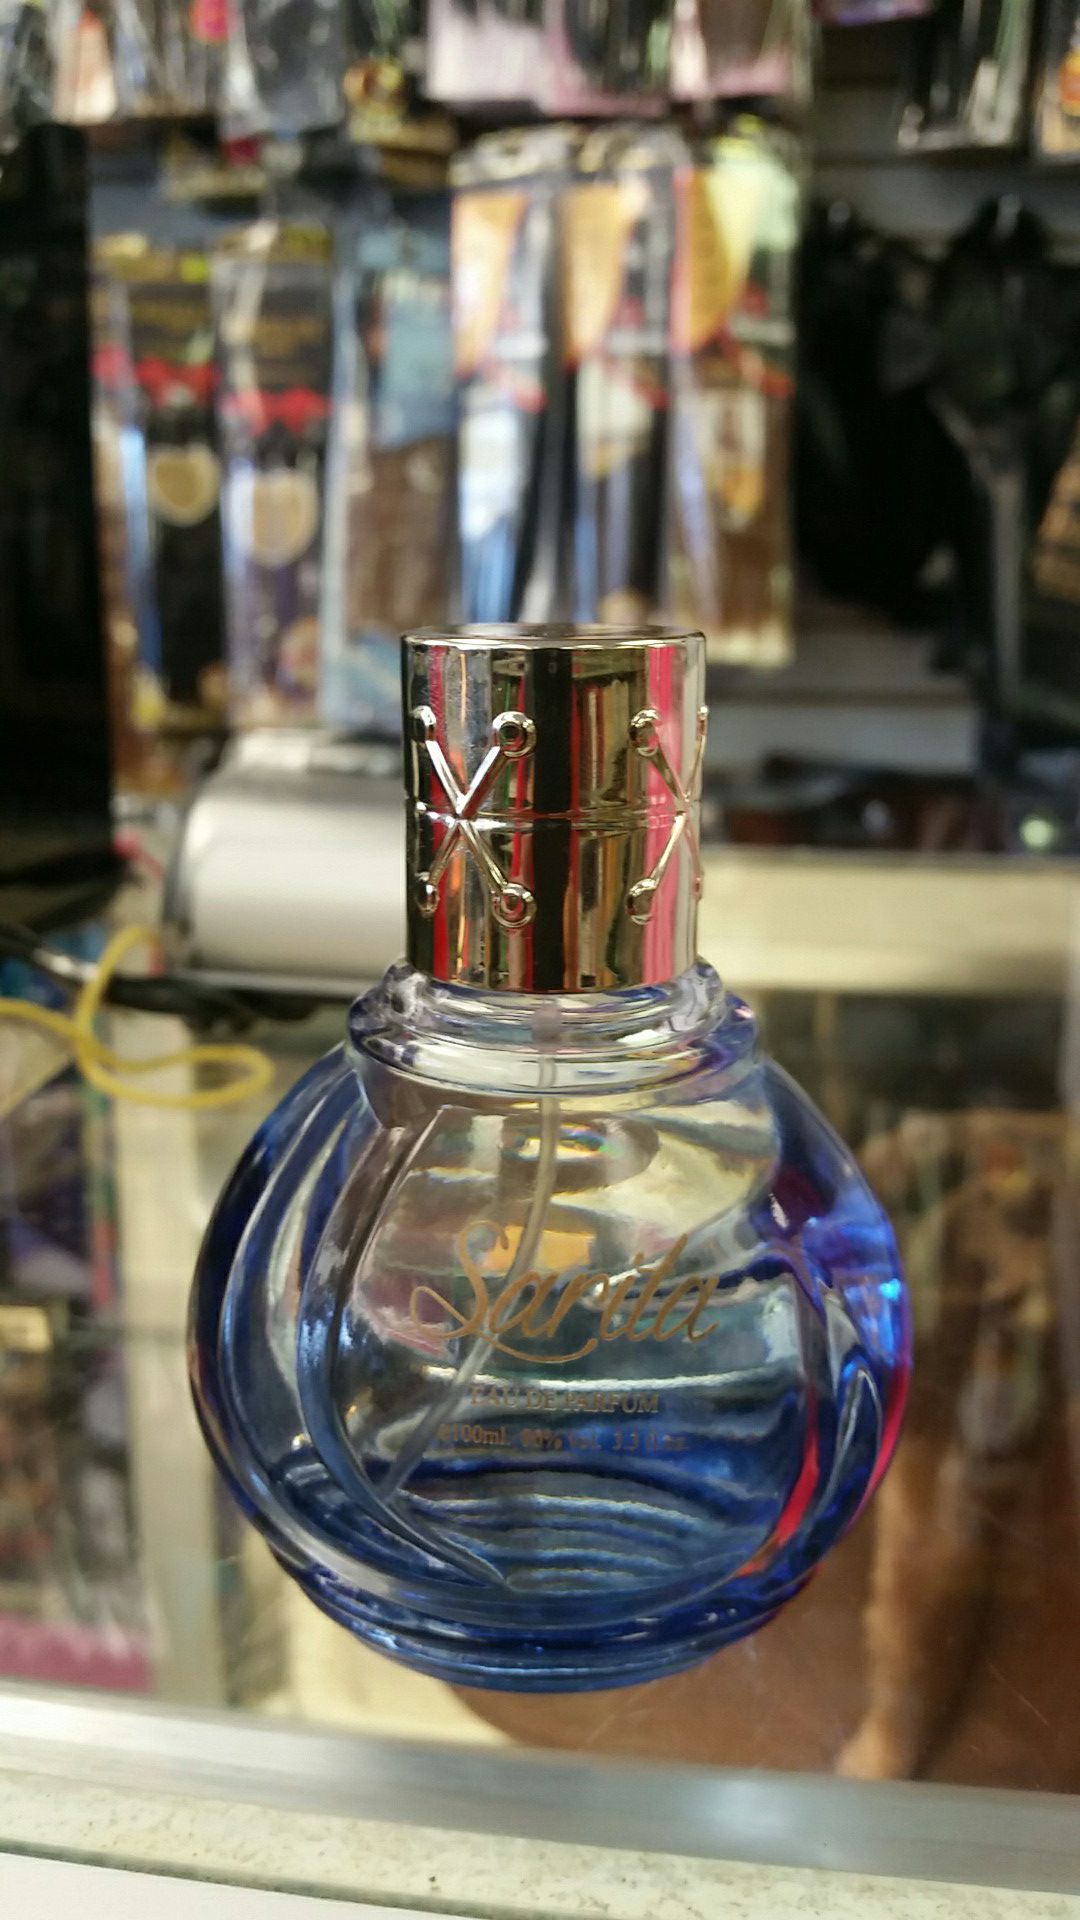 SARITA lady's perfume